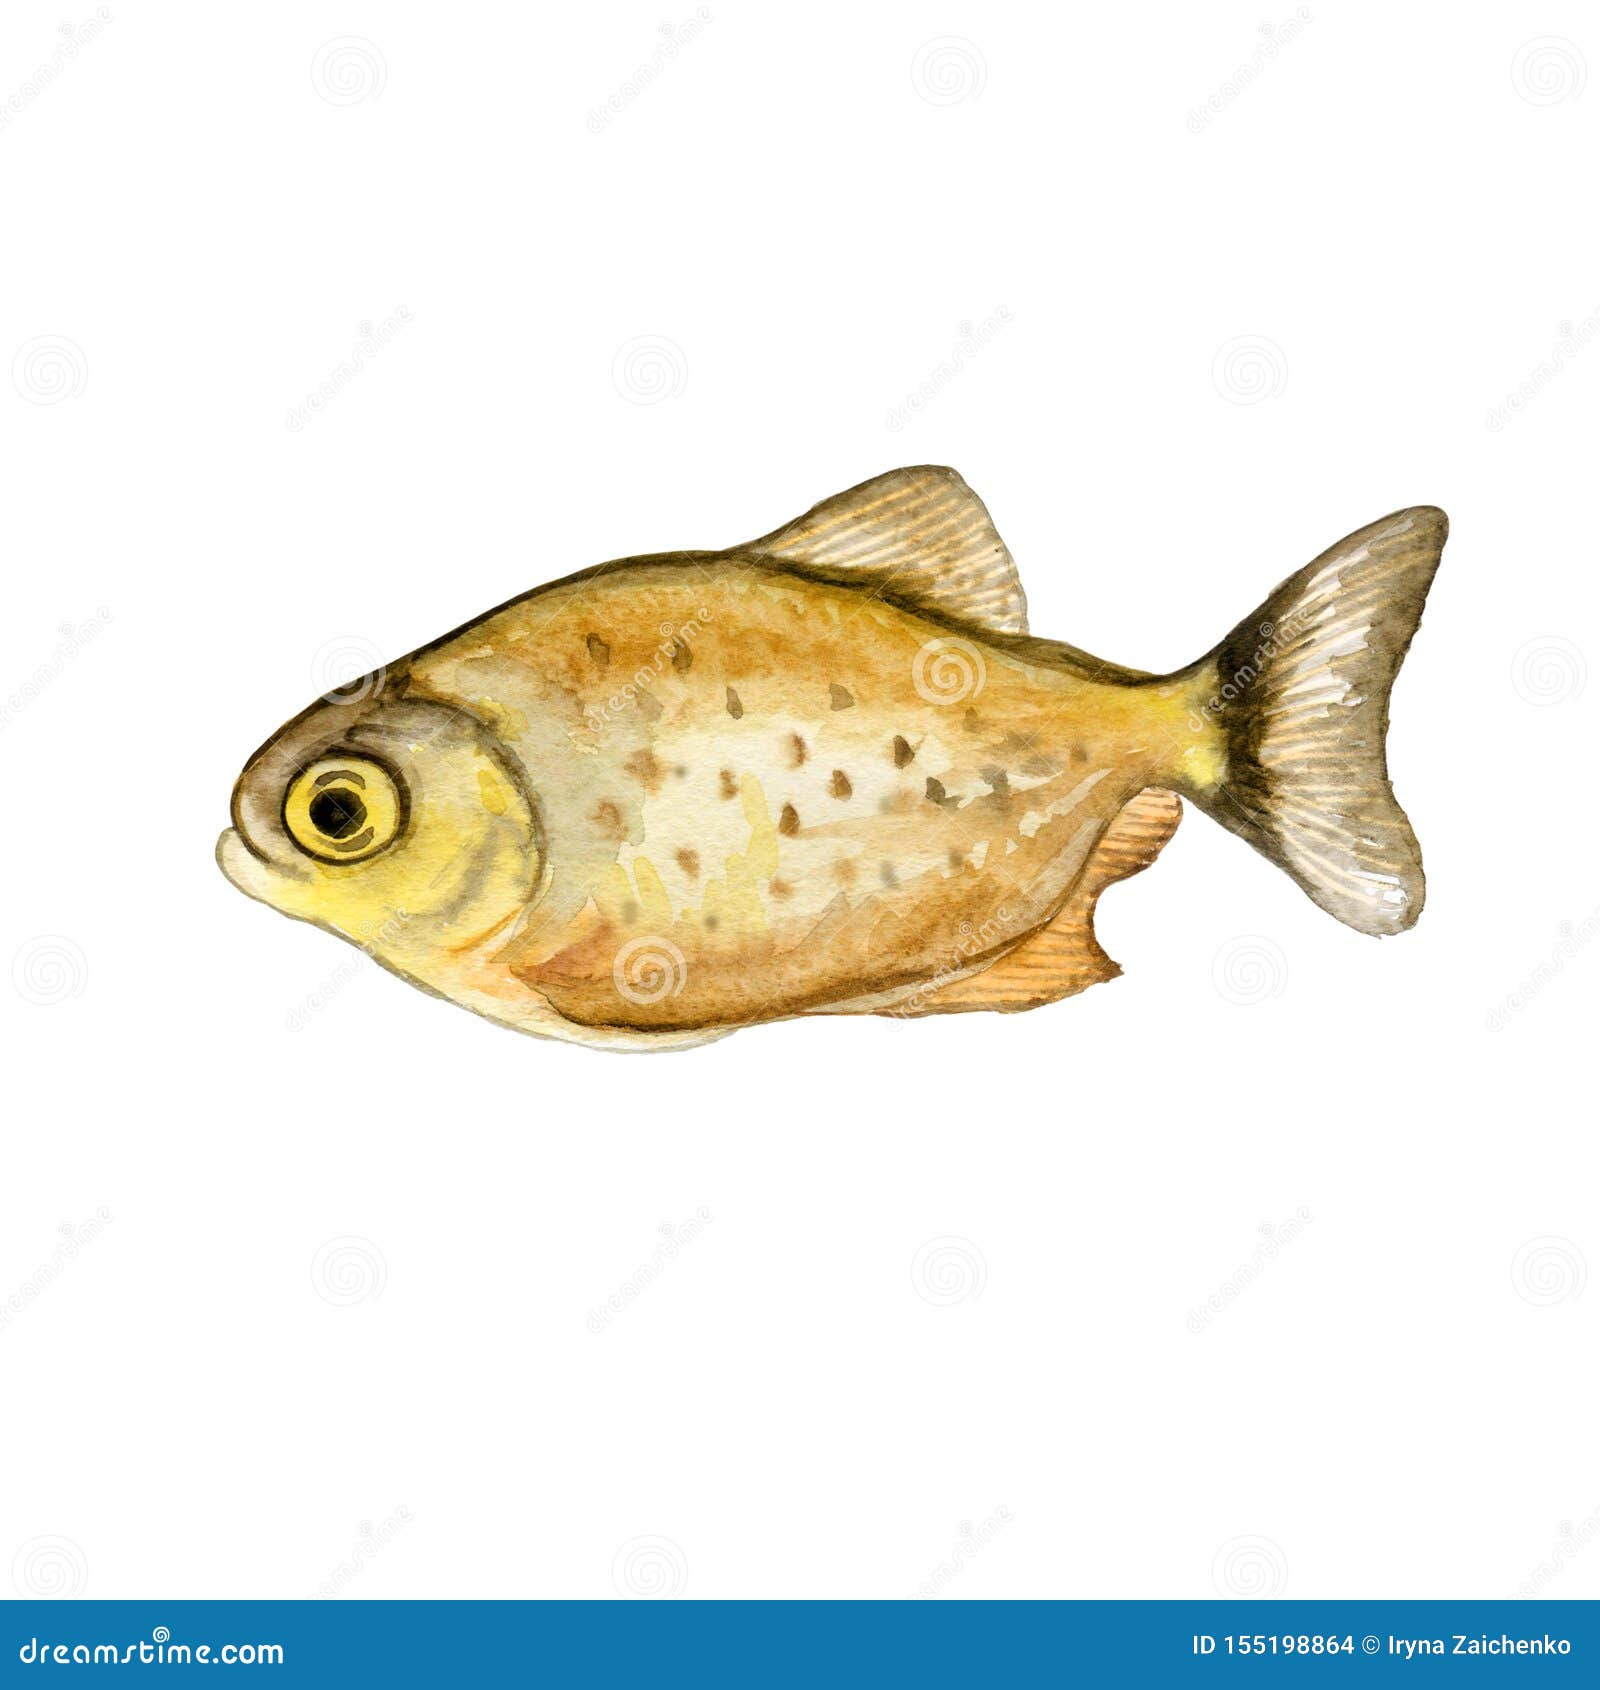 watercolor closeup piranha or pirana fish  on white background. hand drawn dangerous cold-blooded freshwater predator.